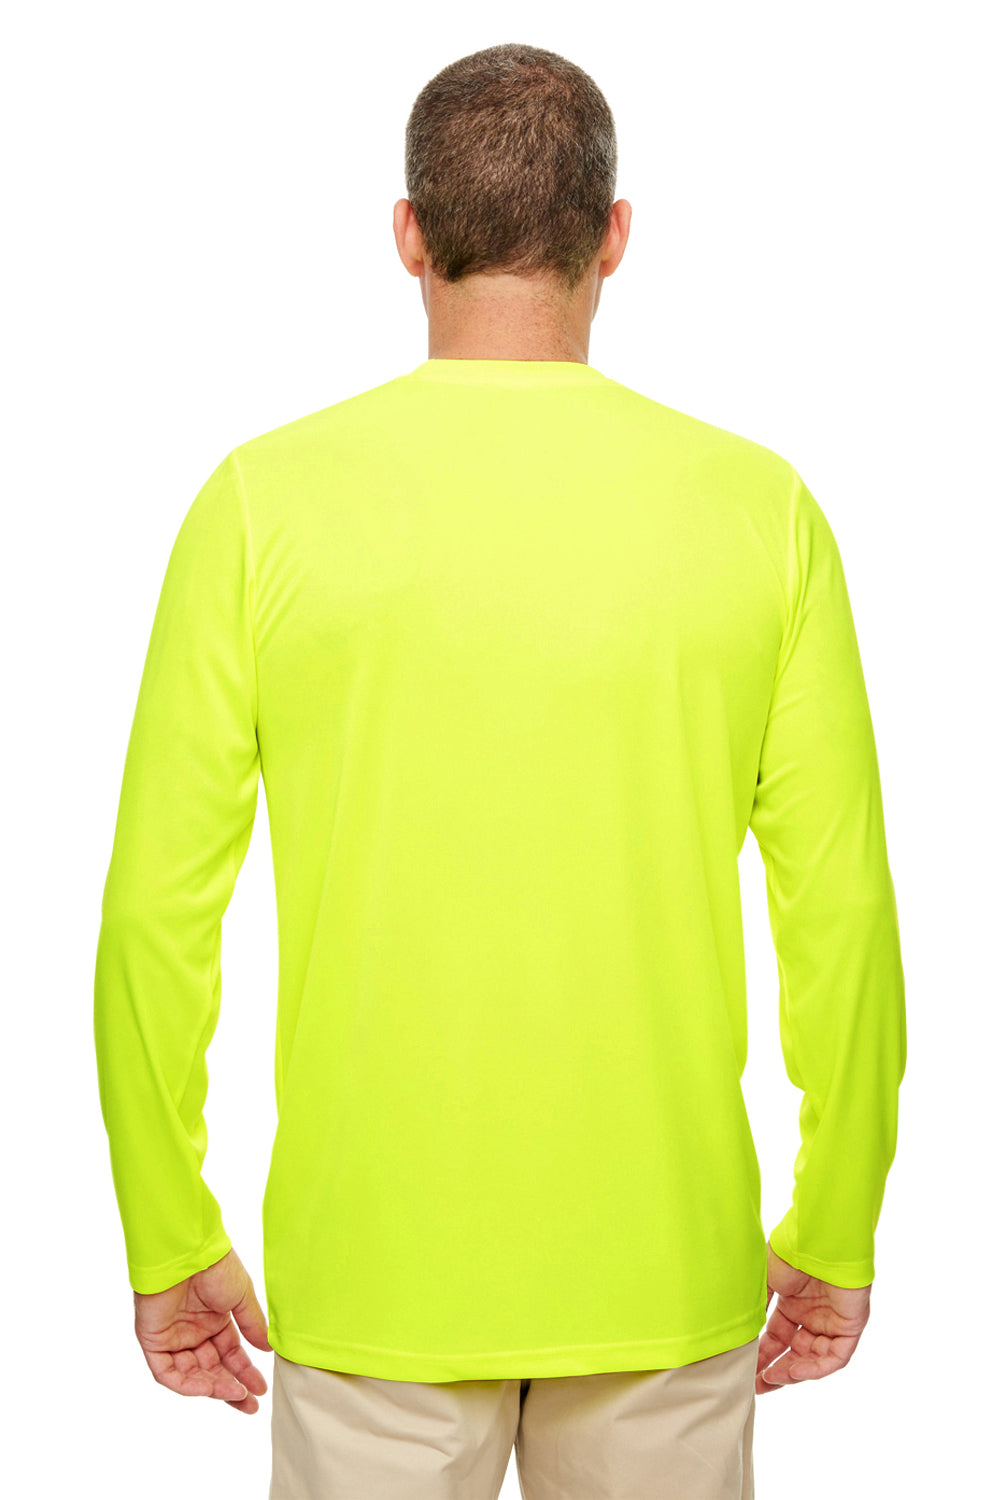 UltraClub 8622 Mens Cool & Dry Performance Moisture Wicking Long Sleeve Crewneck T-Shirt Neon Yellow Back